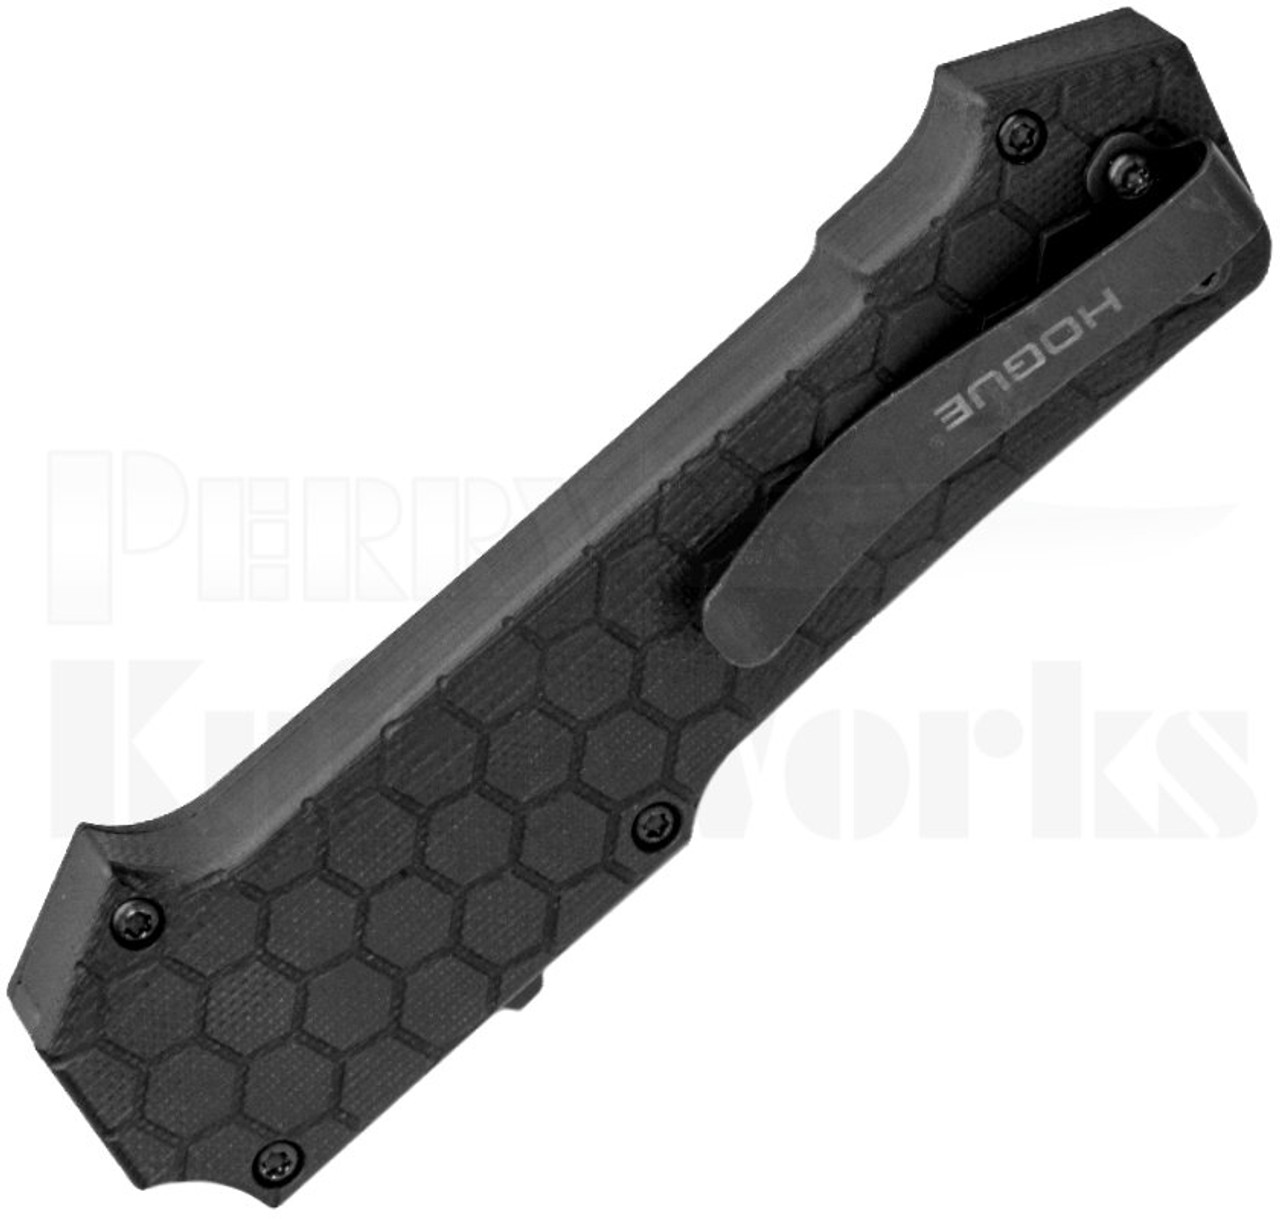 Hogue Compound OTF Automatic Knife Clip Point l Black G-10 l 34036 l For Sale